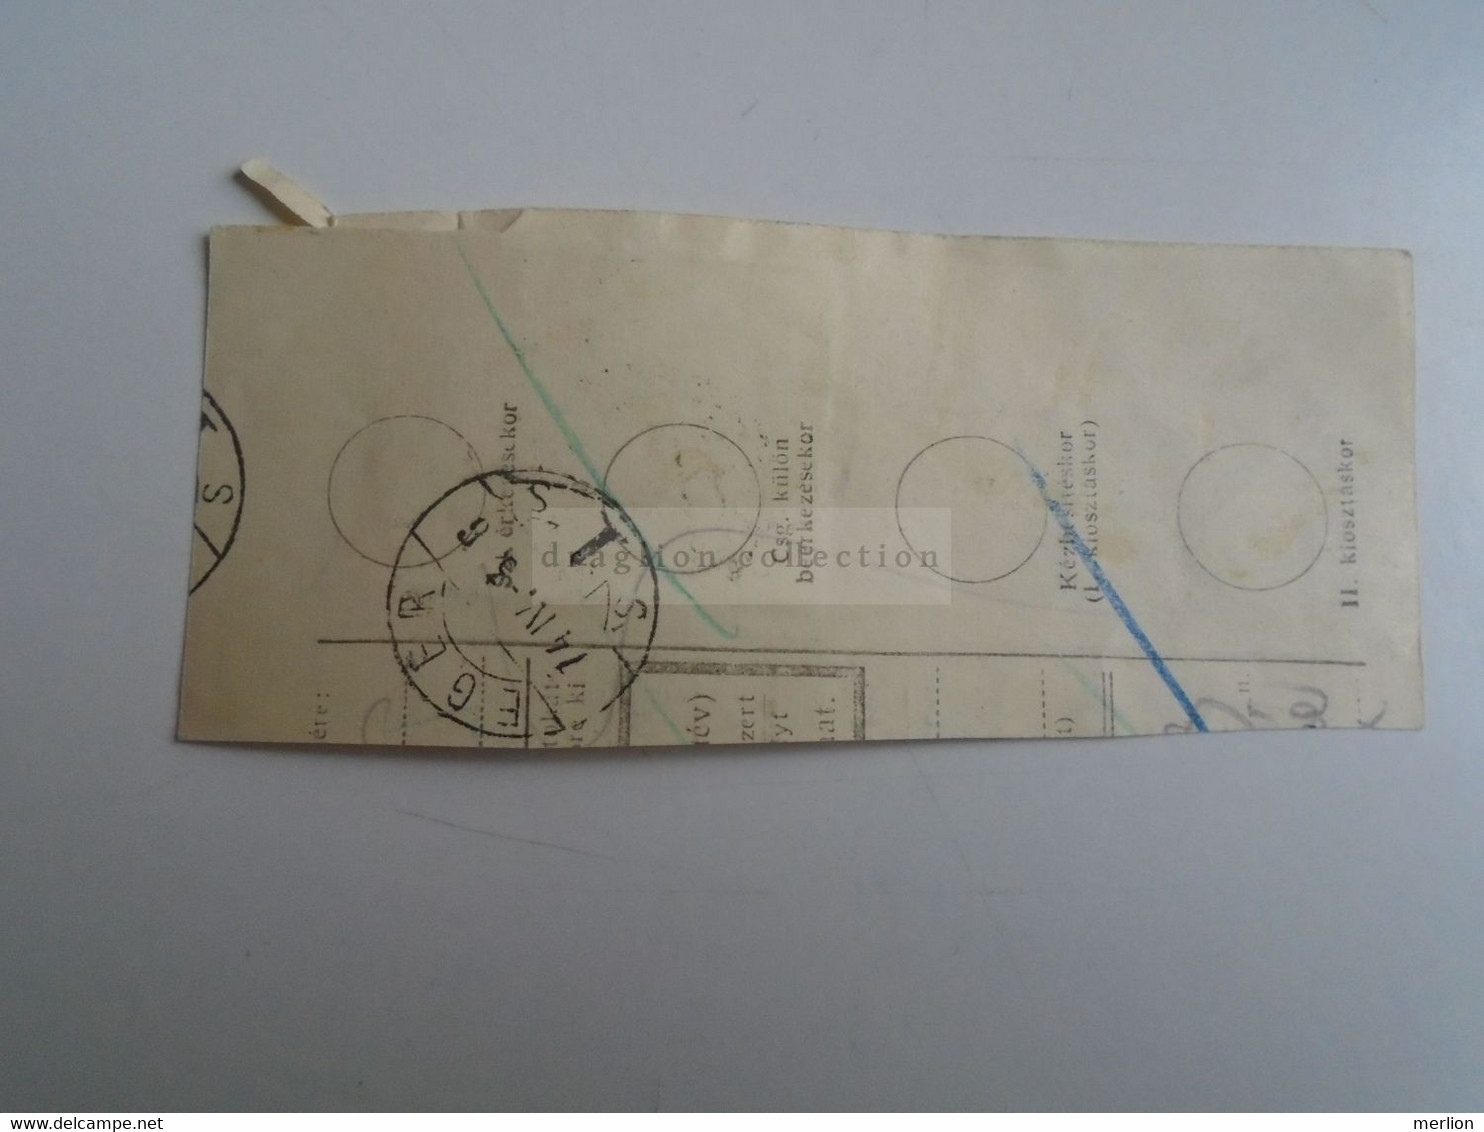 D187479  Parcel Card  (cut) Hungary 1974  Handstamp With Postal Tax  40 Filler - Paketmarken